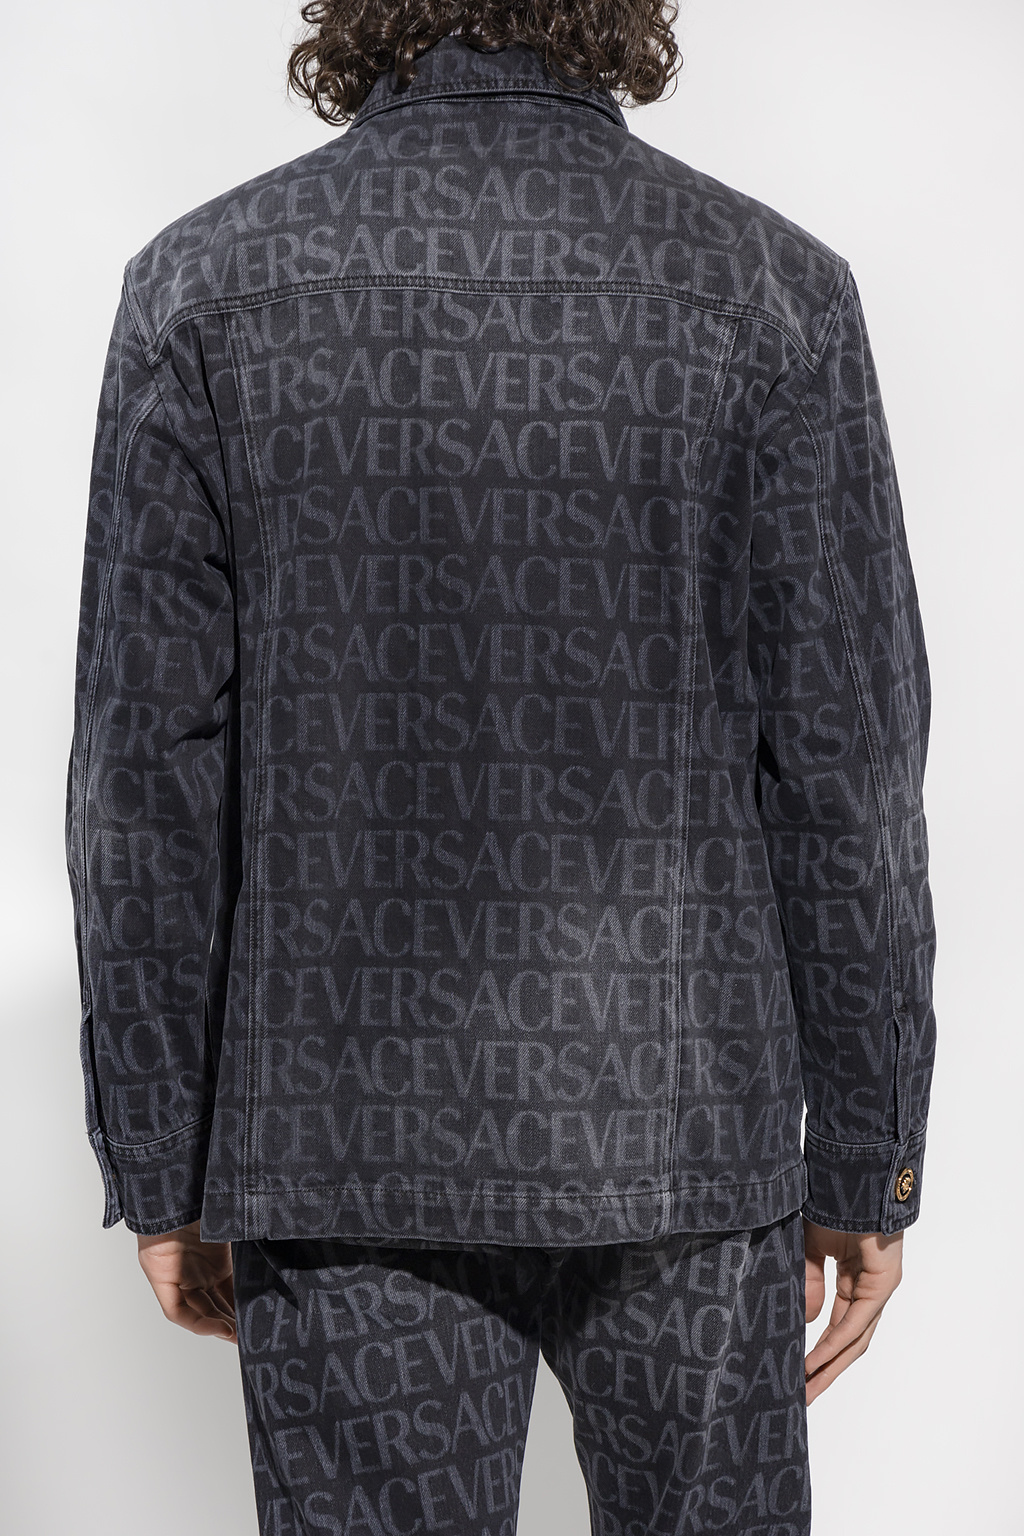 Versace Printed Fast Flight Sleeveless T-Shirt